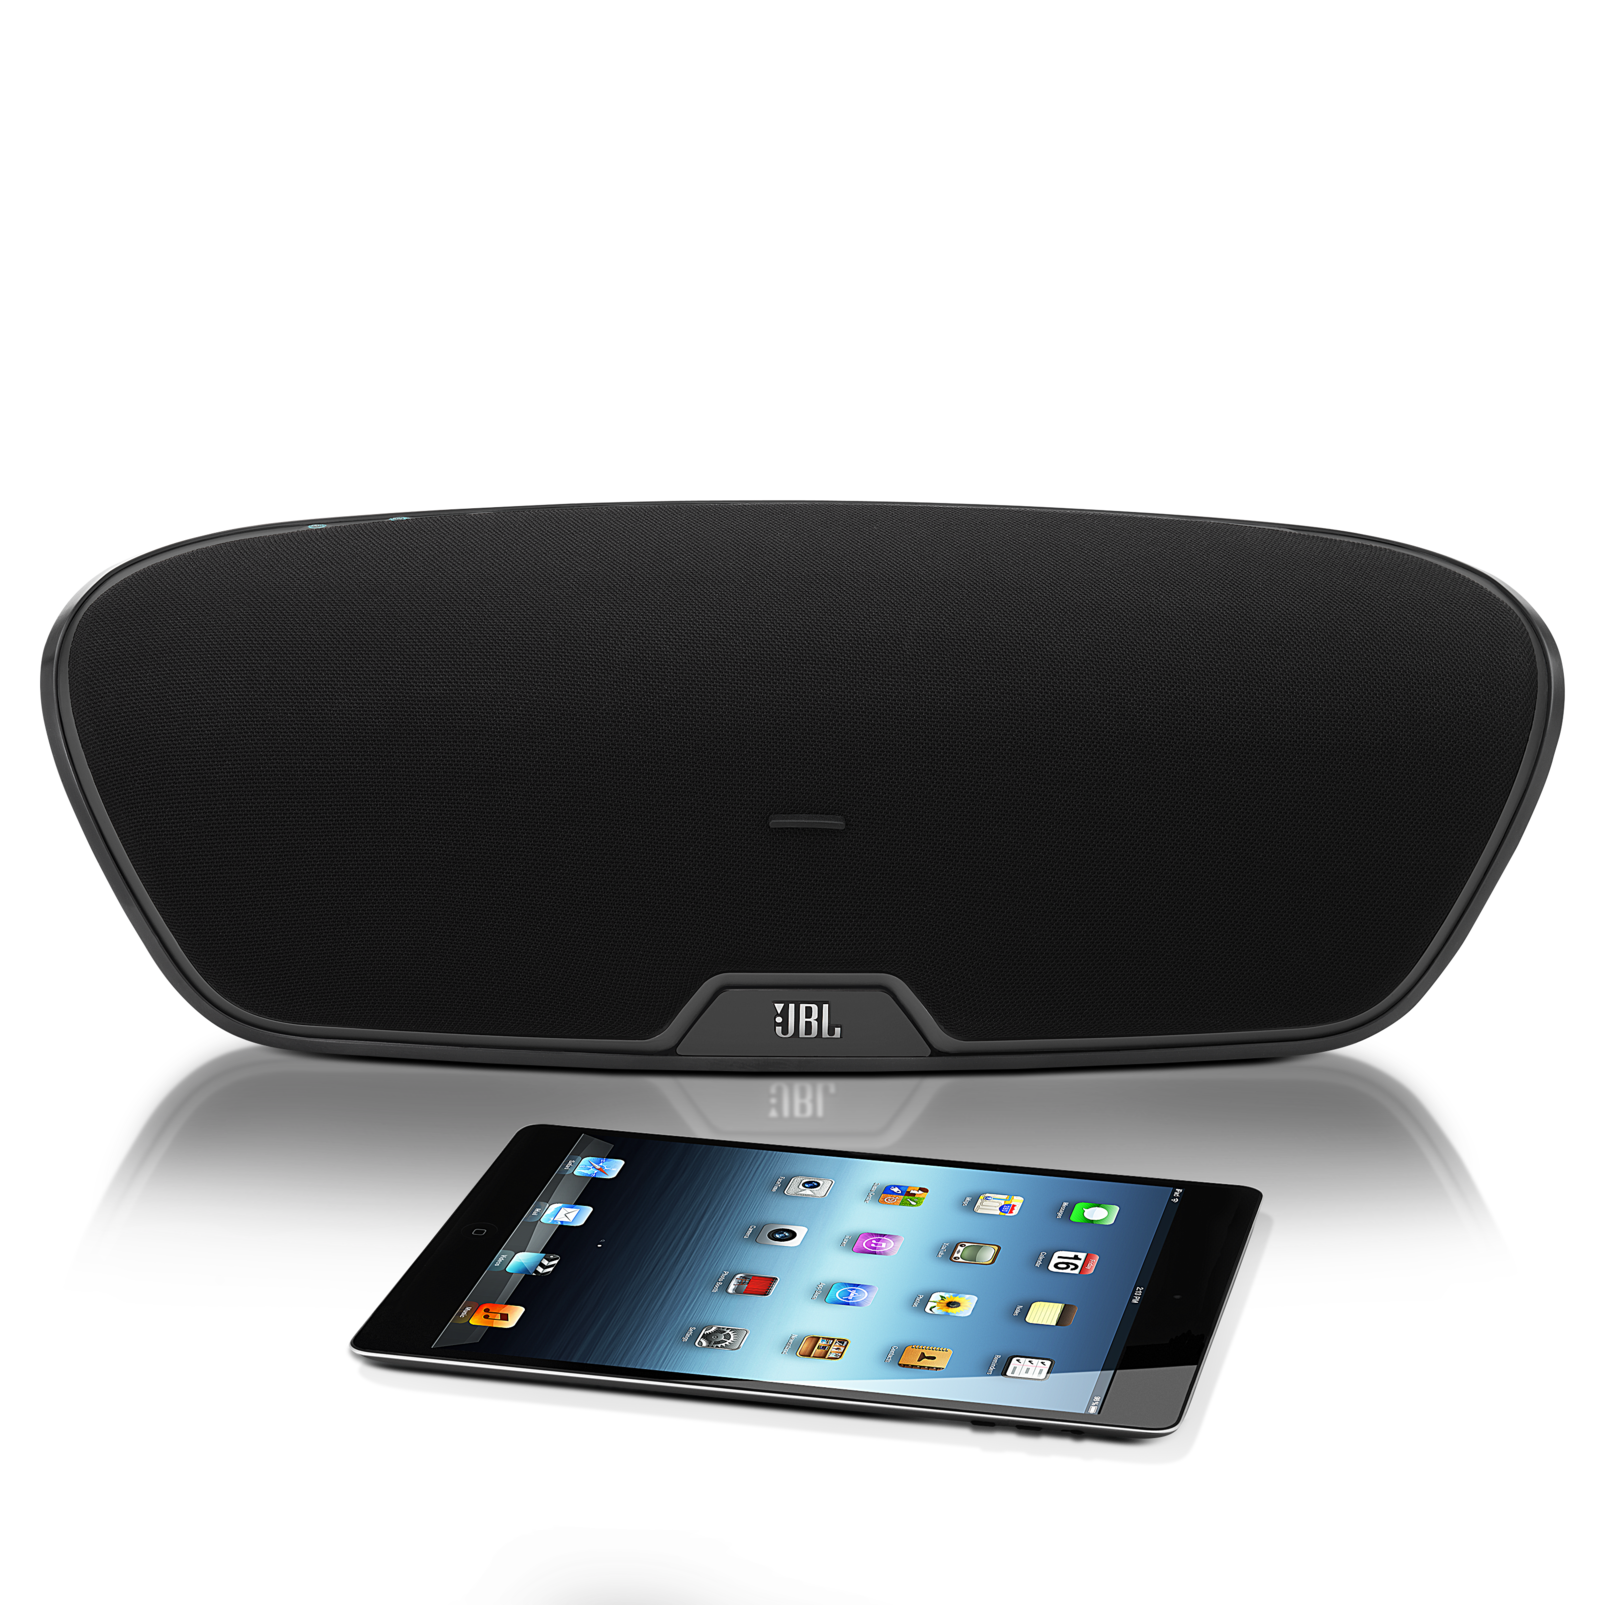 JBL OnBeat Venue Lightning - Black - Wireless iPhone 4 and iPad speaker dock - Detailshot 1